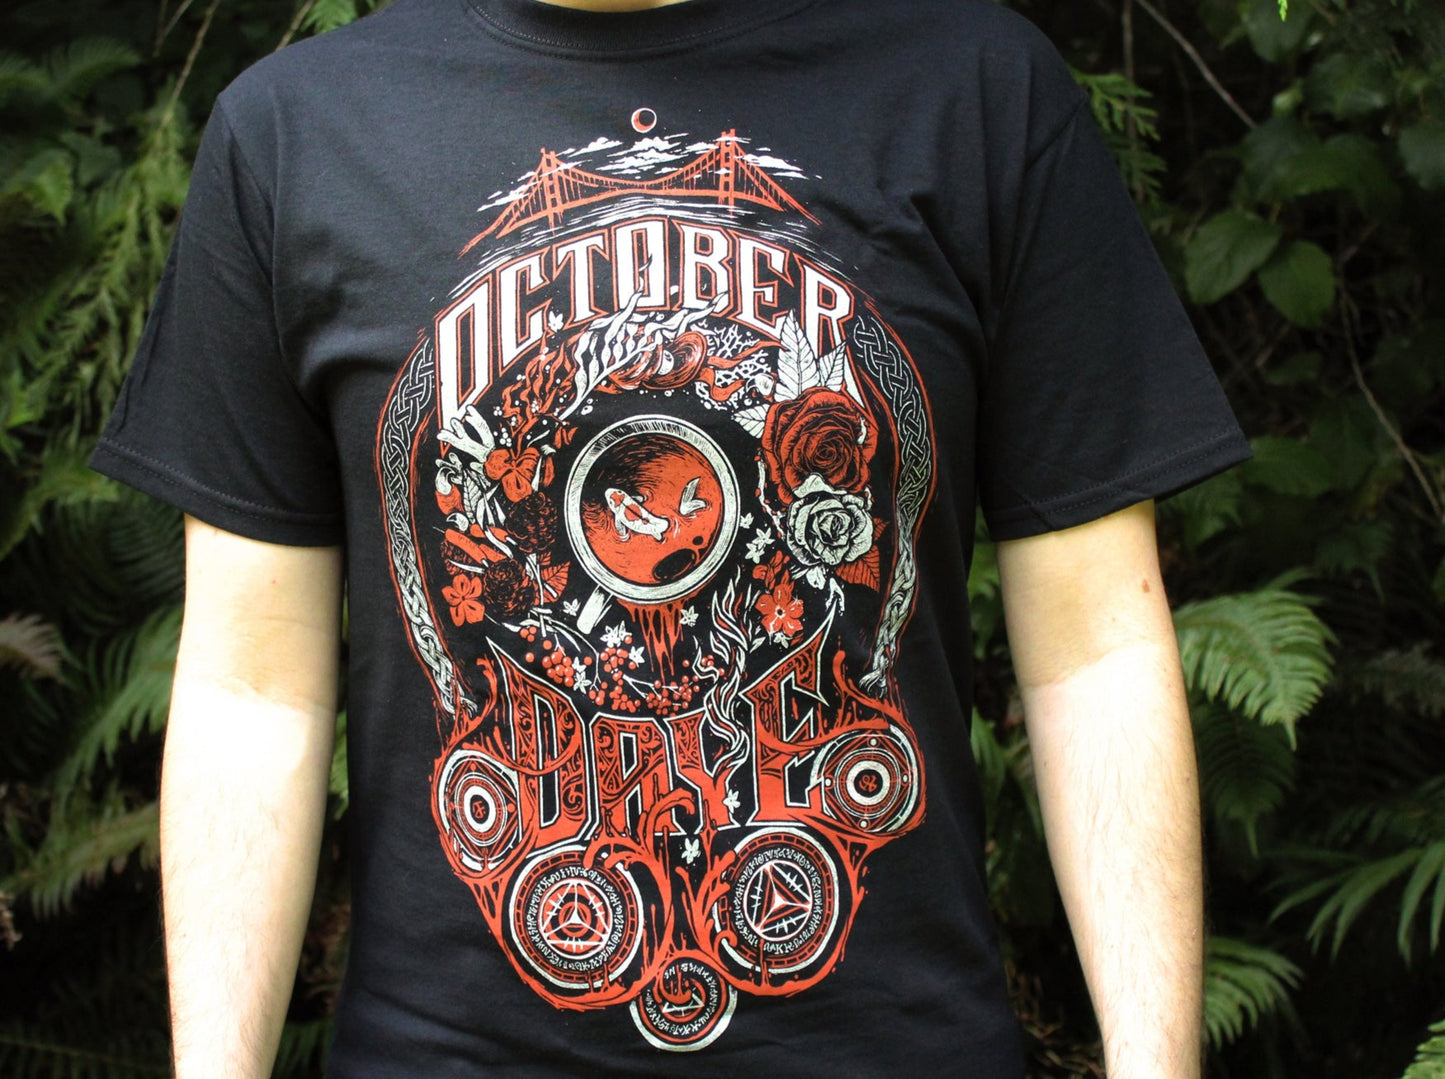 October Daye Shirt